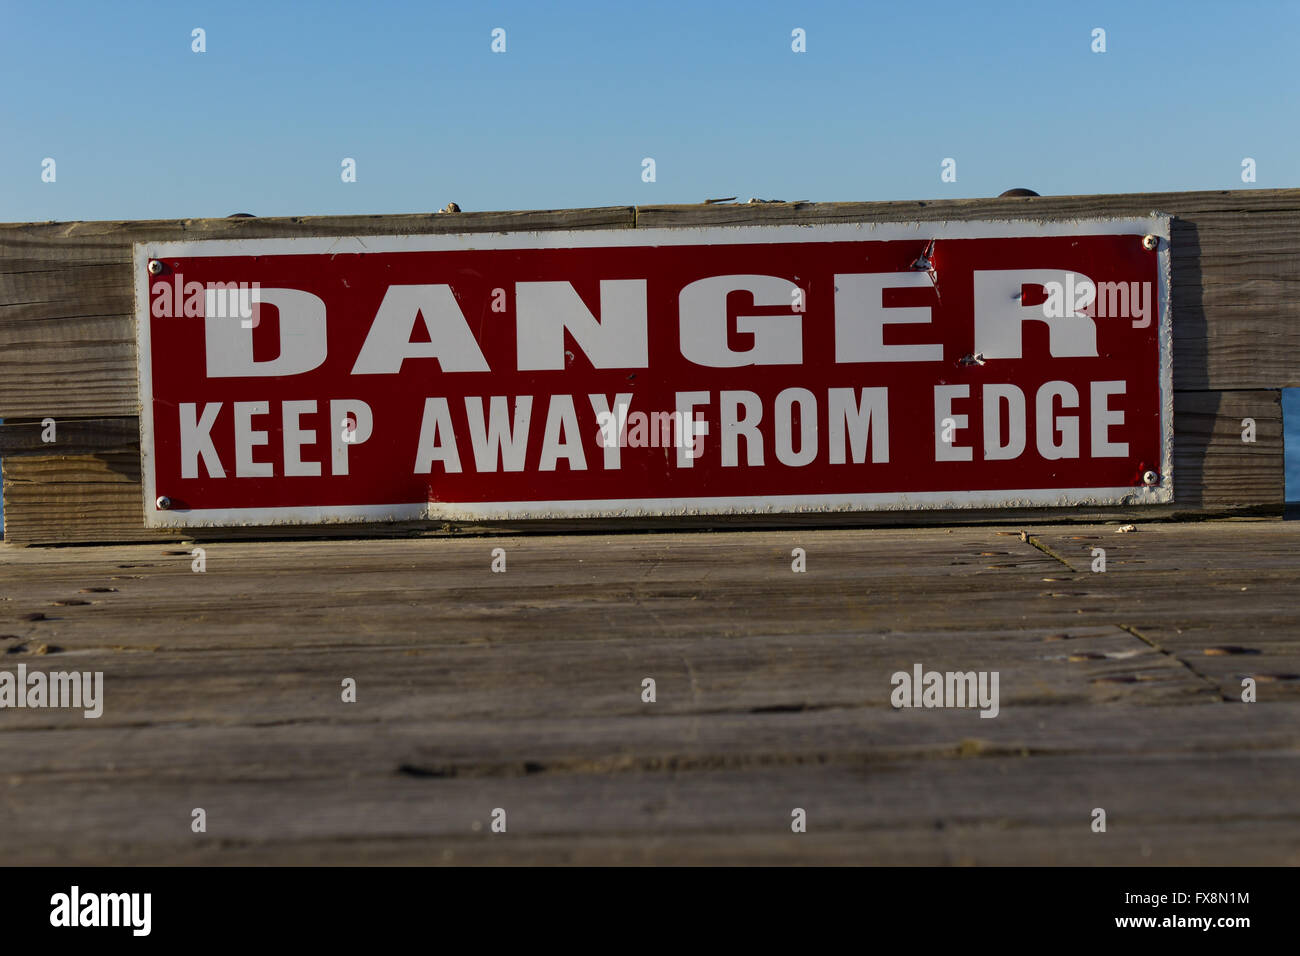 Danger Keep away from edge Stock Photo